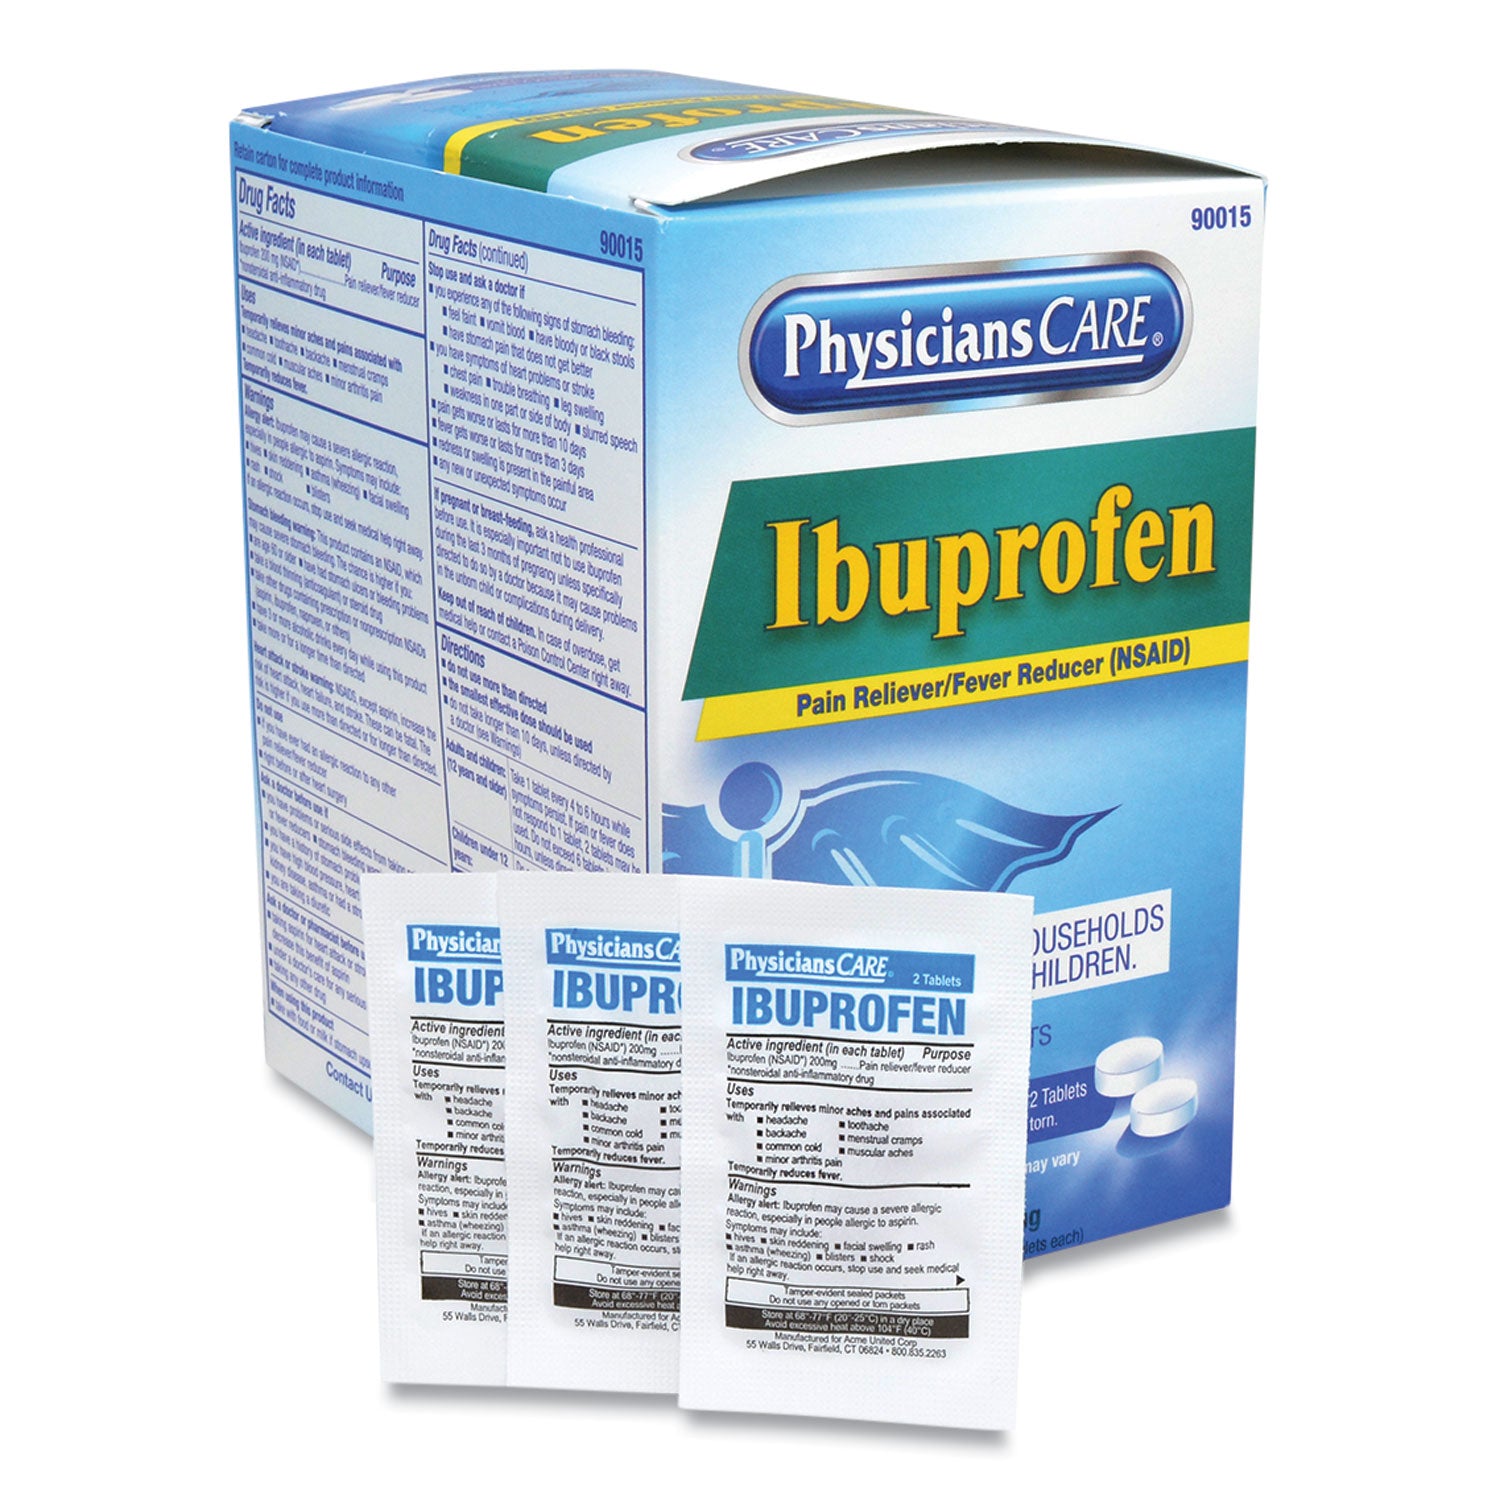 ibuprofen-medication-two-pack-50-packs-box_acm90015 - 1